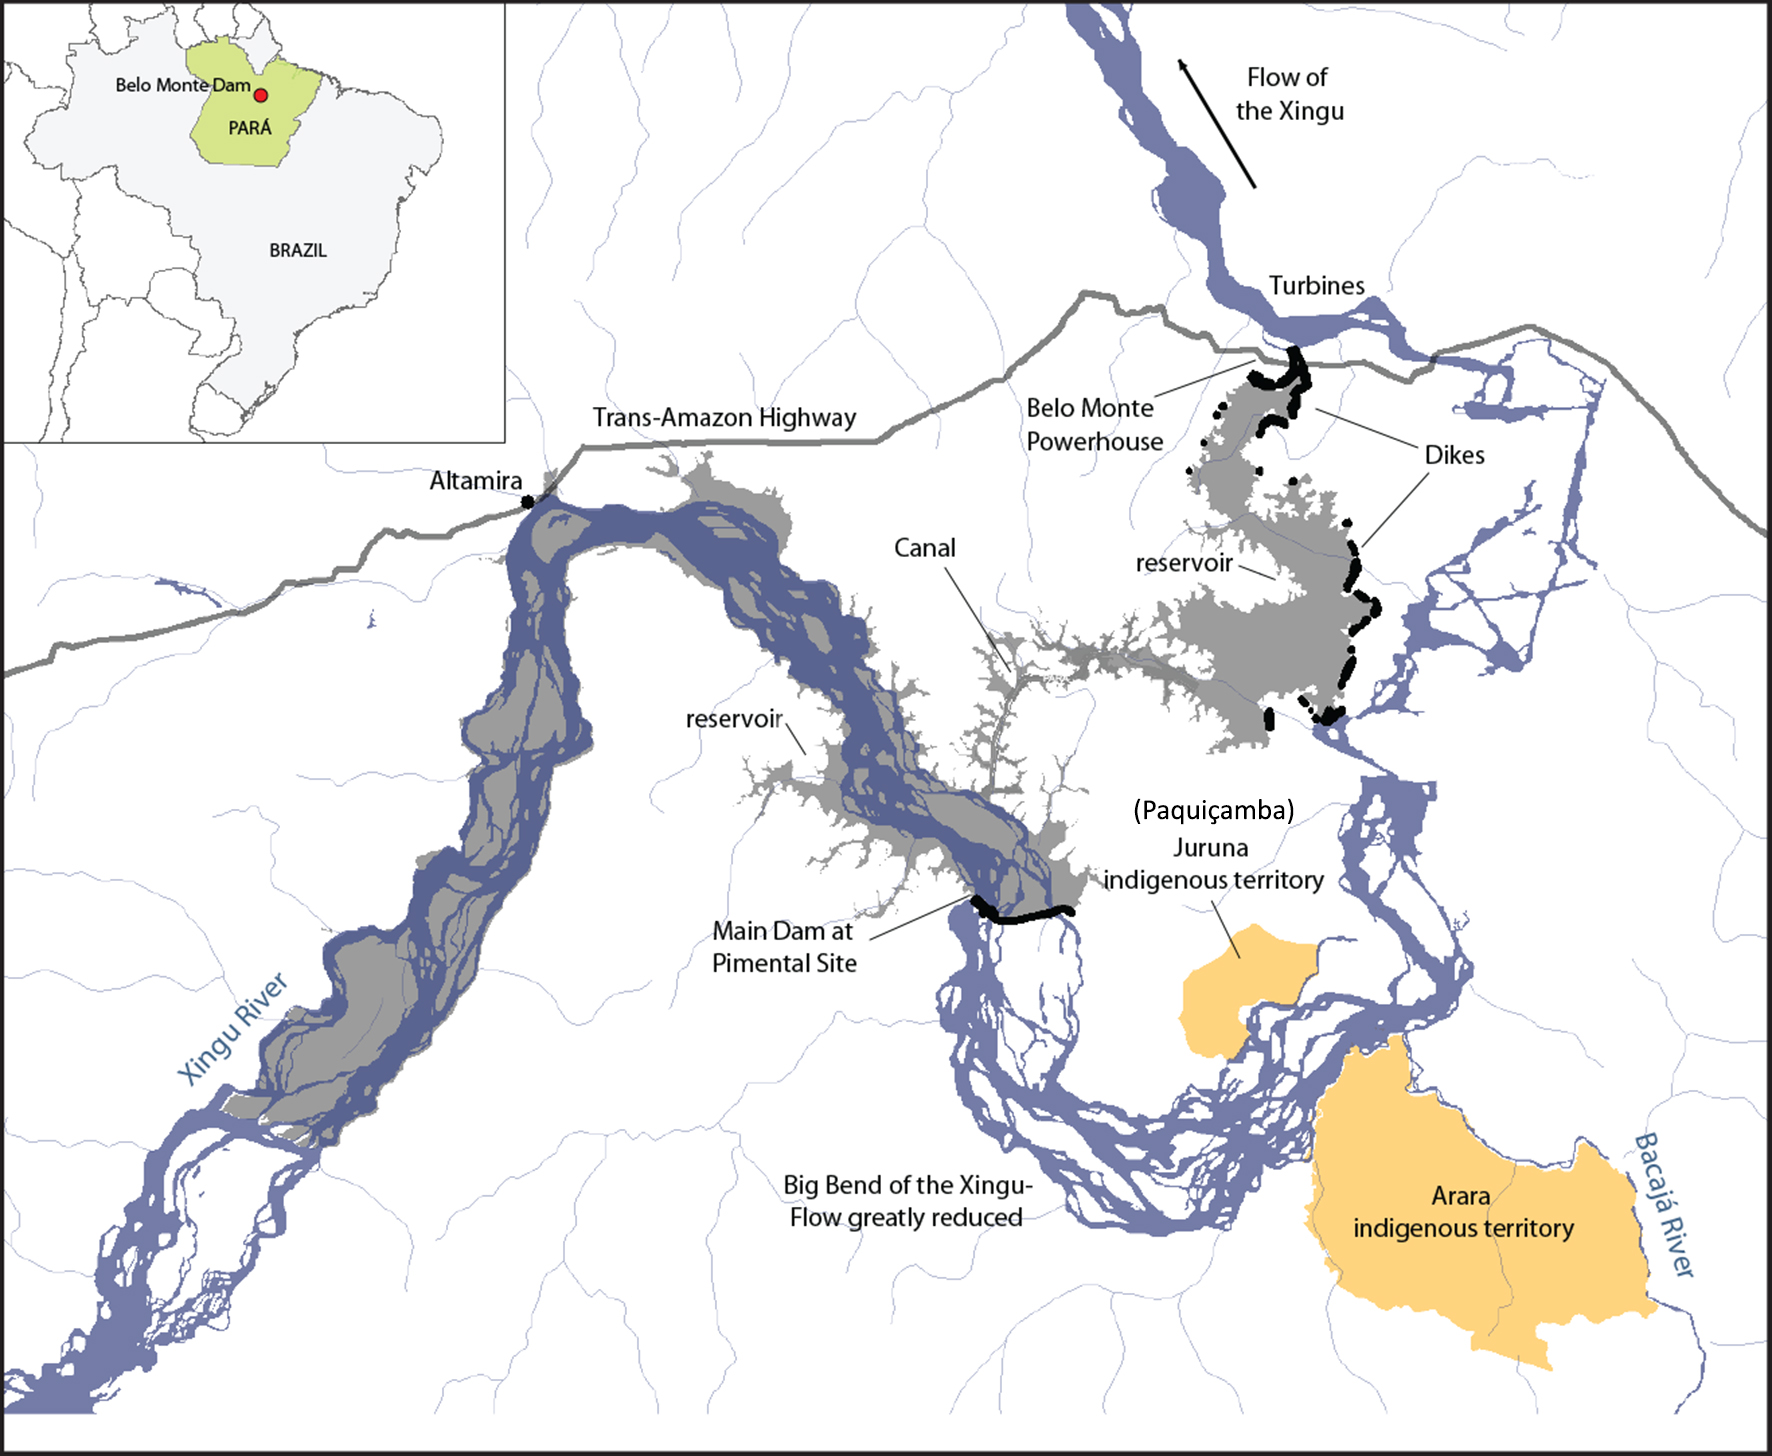 Belo Monte area, Brazil. Map by International Rivers, adapted by Marilene Cardoso Ribeiro